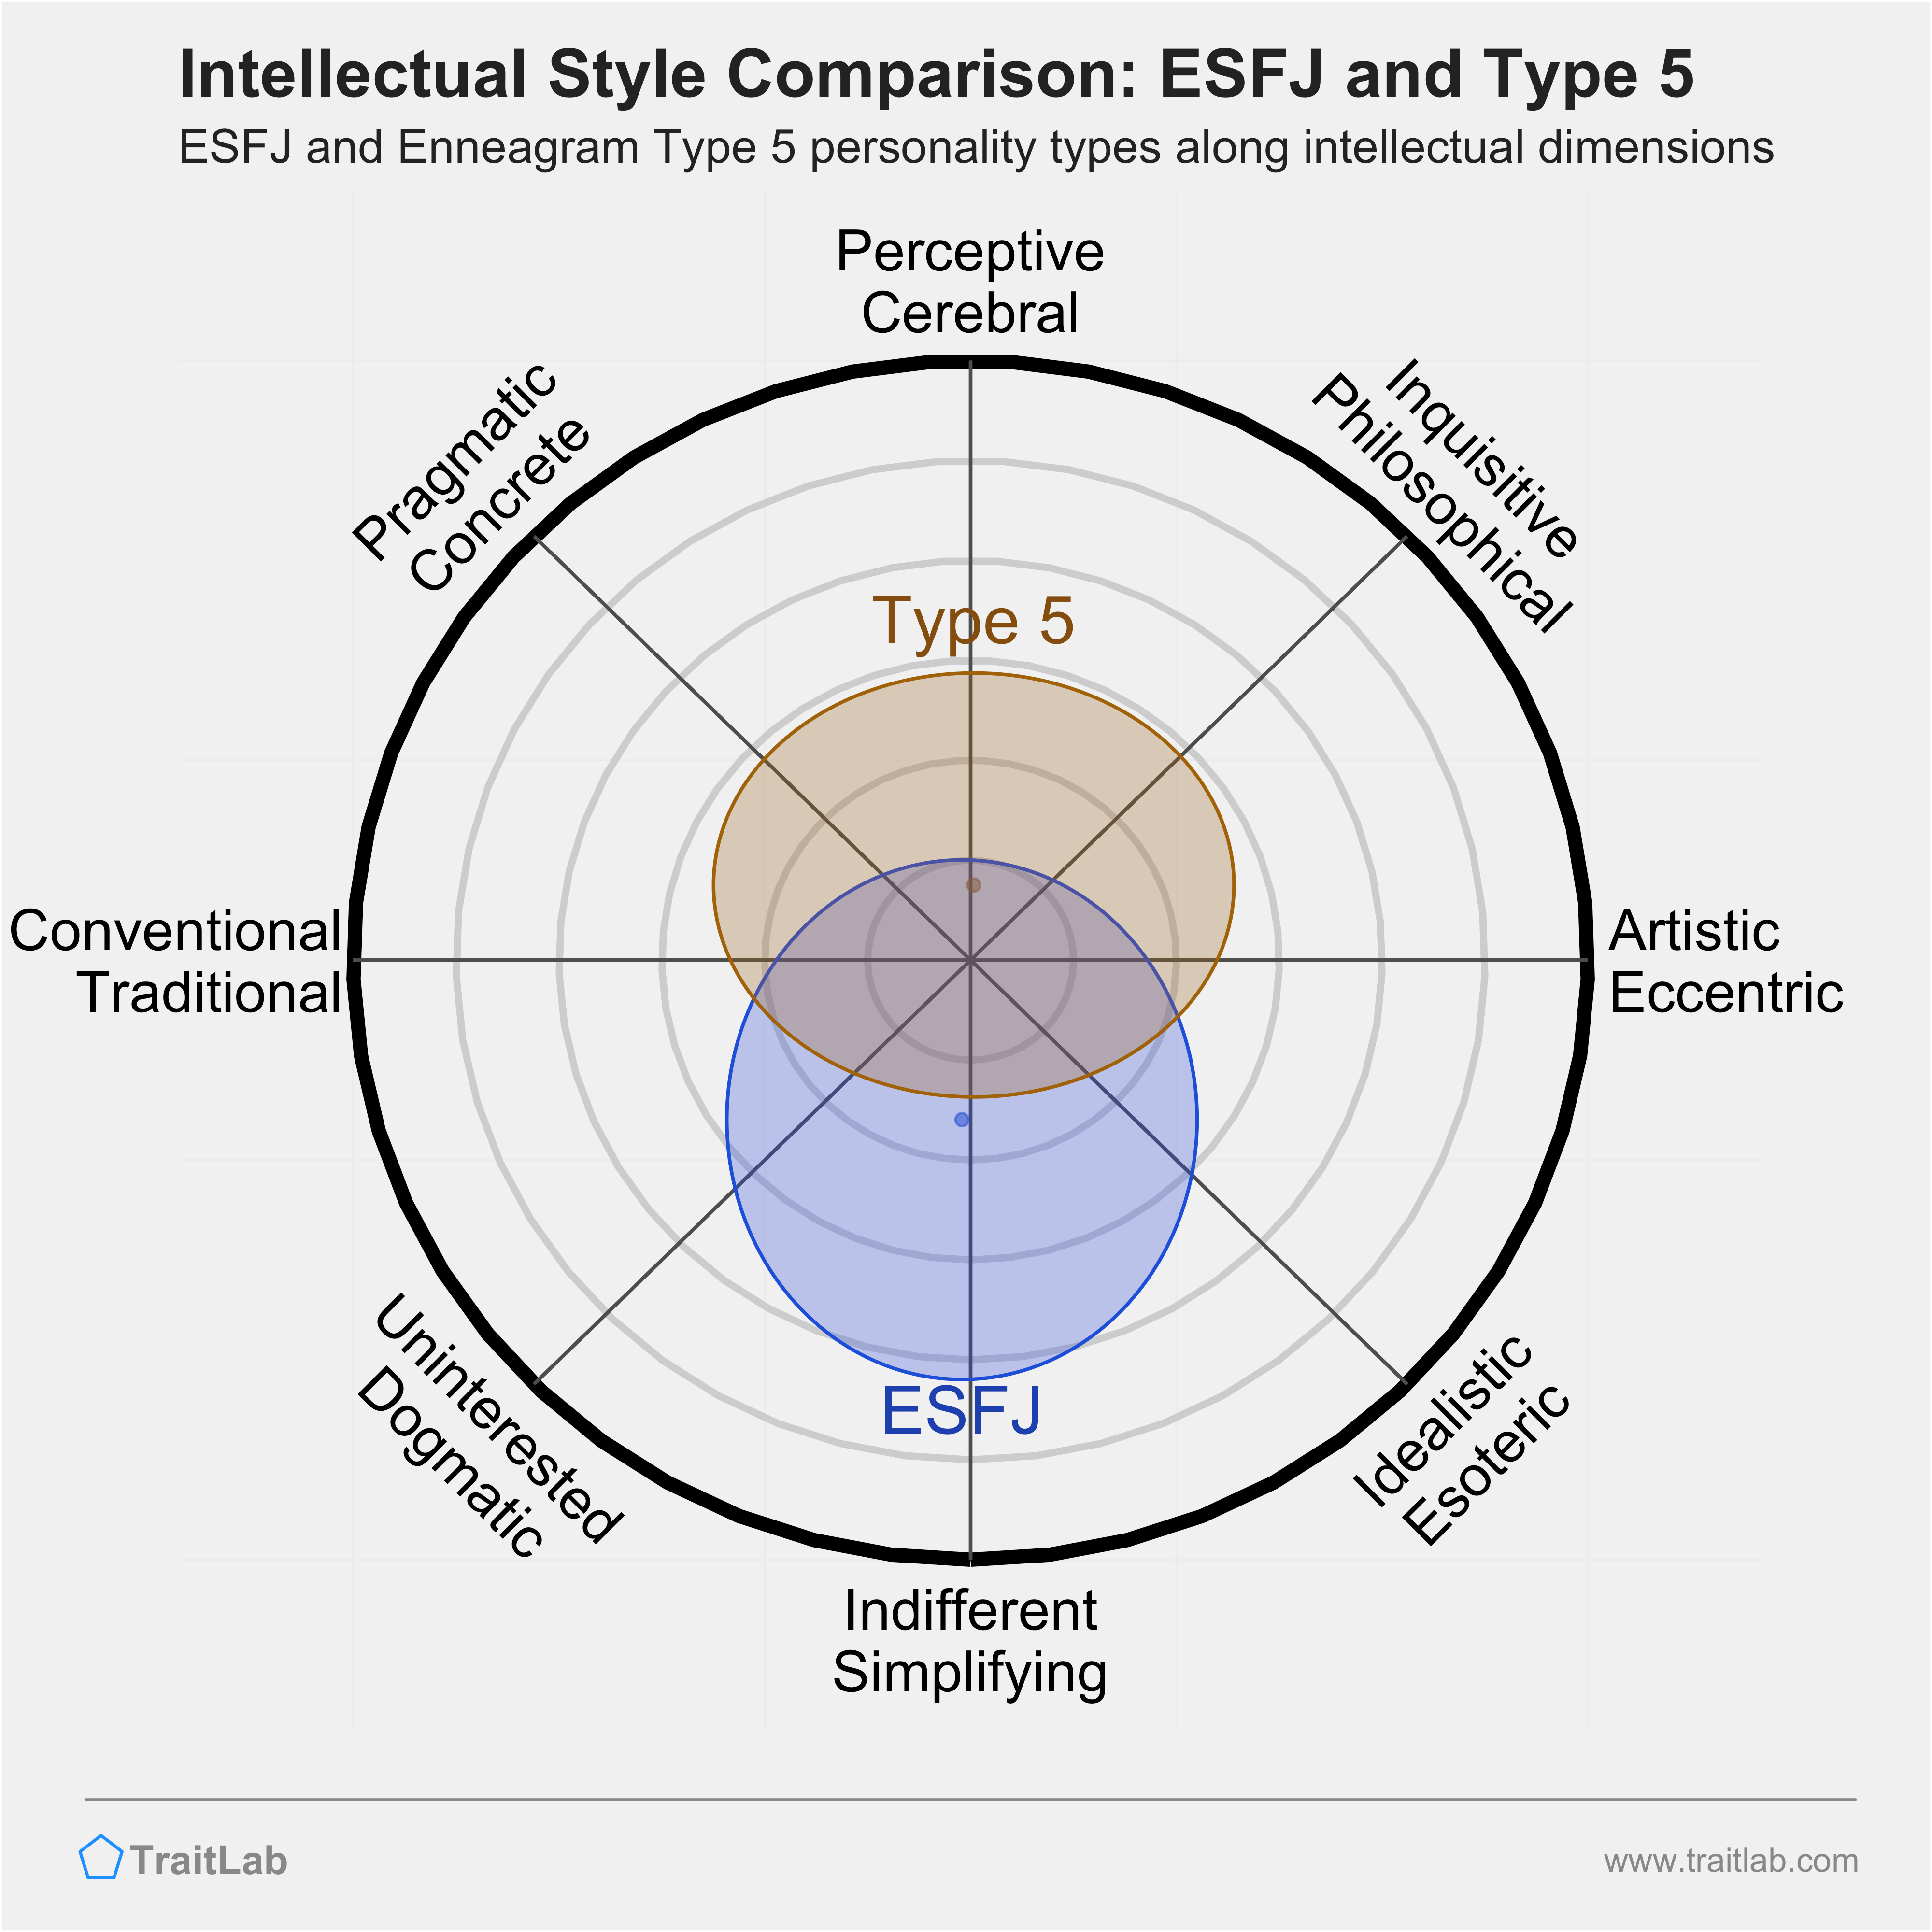 ESFJ and Type 5 comparison across intellectual dimensions